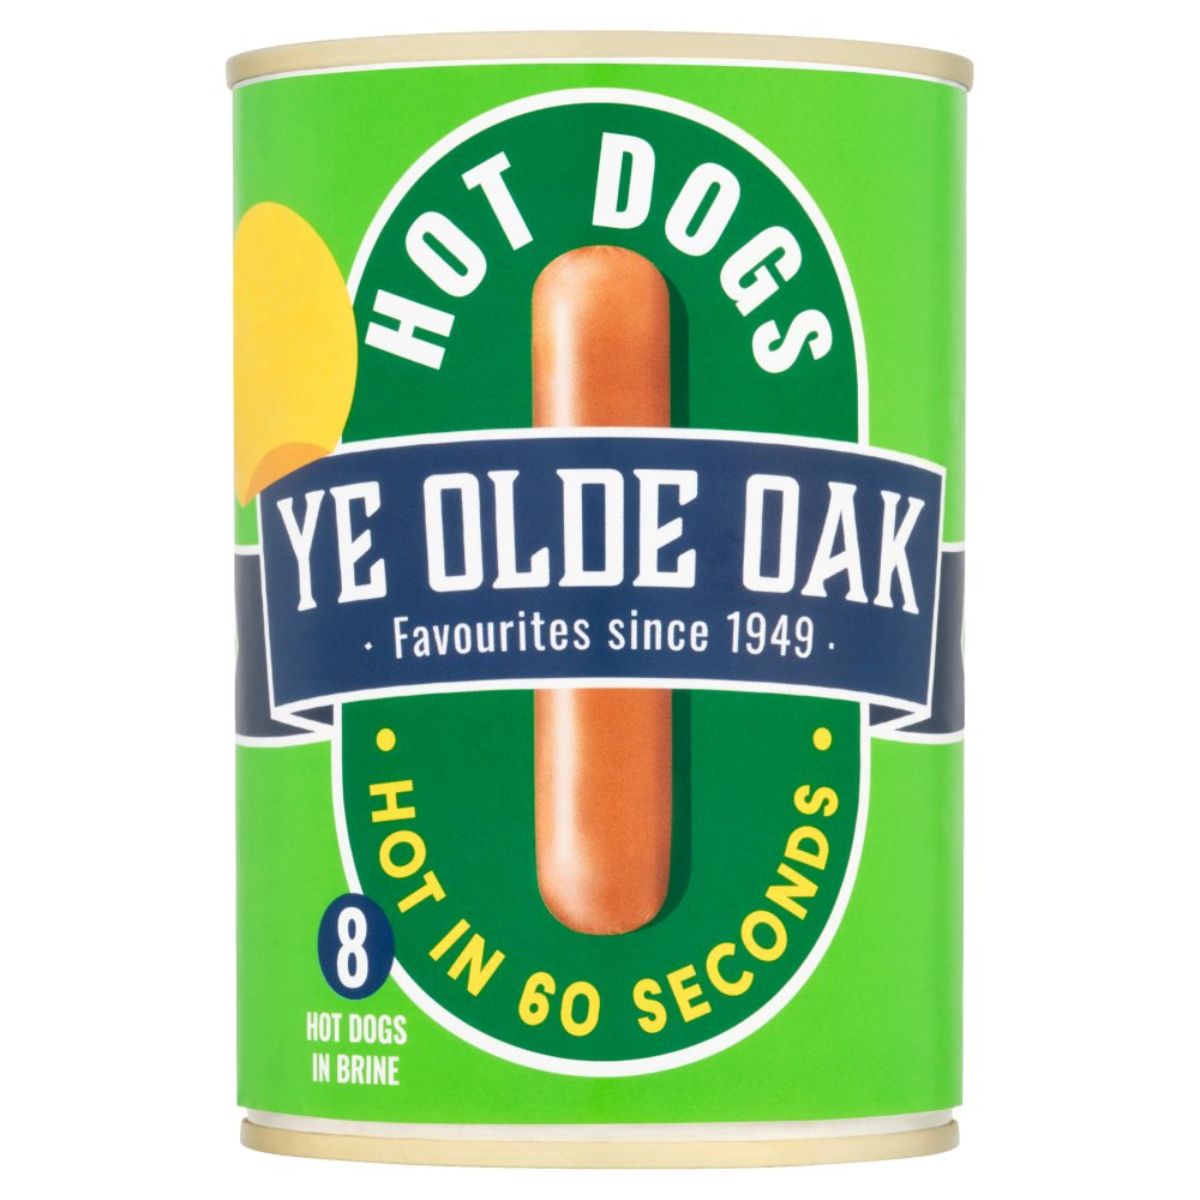 Ye Olde Oak - Hot Dog in 60 Seconds - 400g hot dogs in a can.